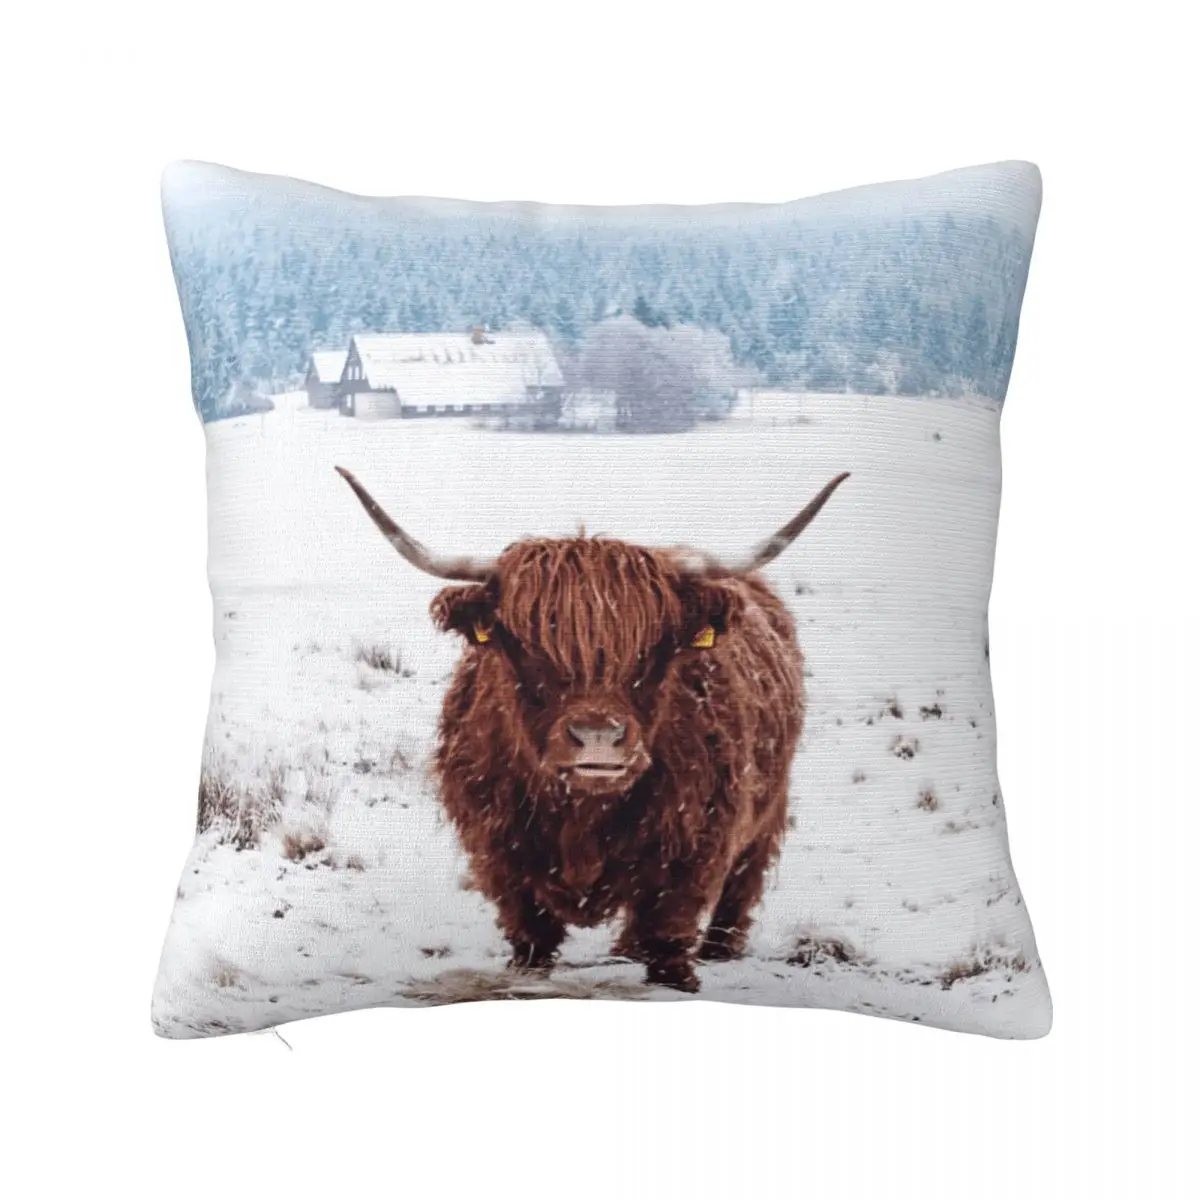 Highland Cow Plaid Pillowcase Printing Fabric Cushion Cover Decorative Animal Throw Pillow Case Cover Home Zipper 40*40cm